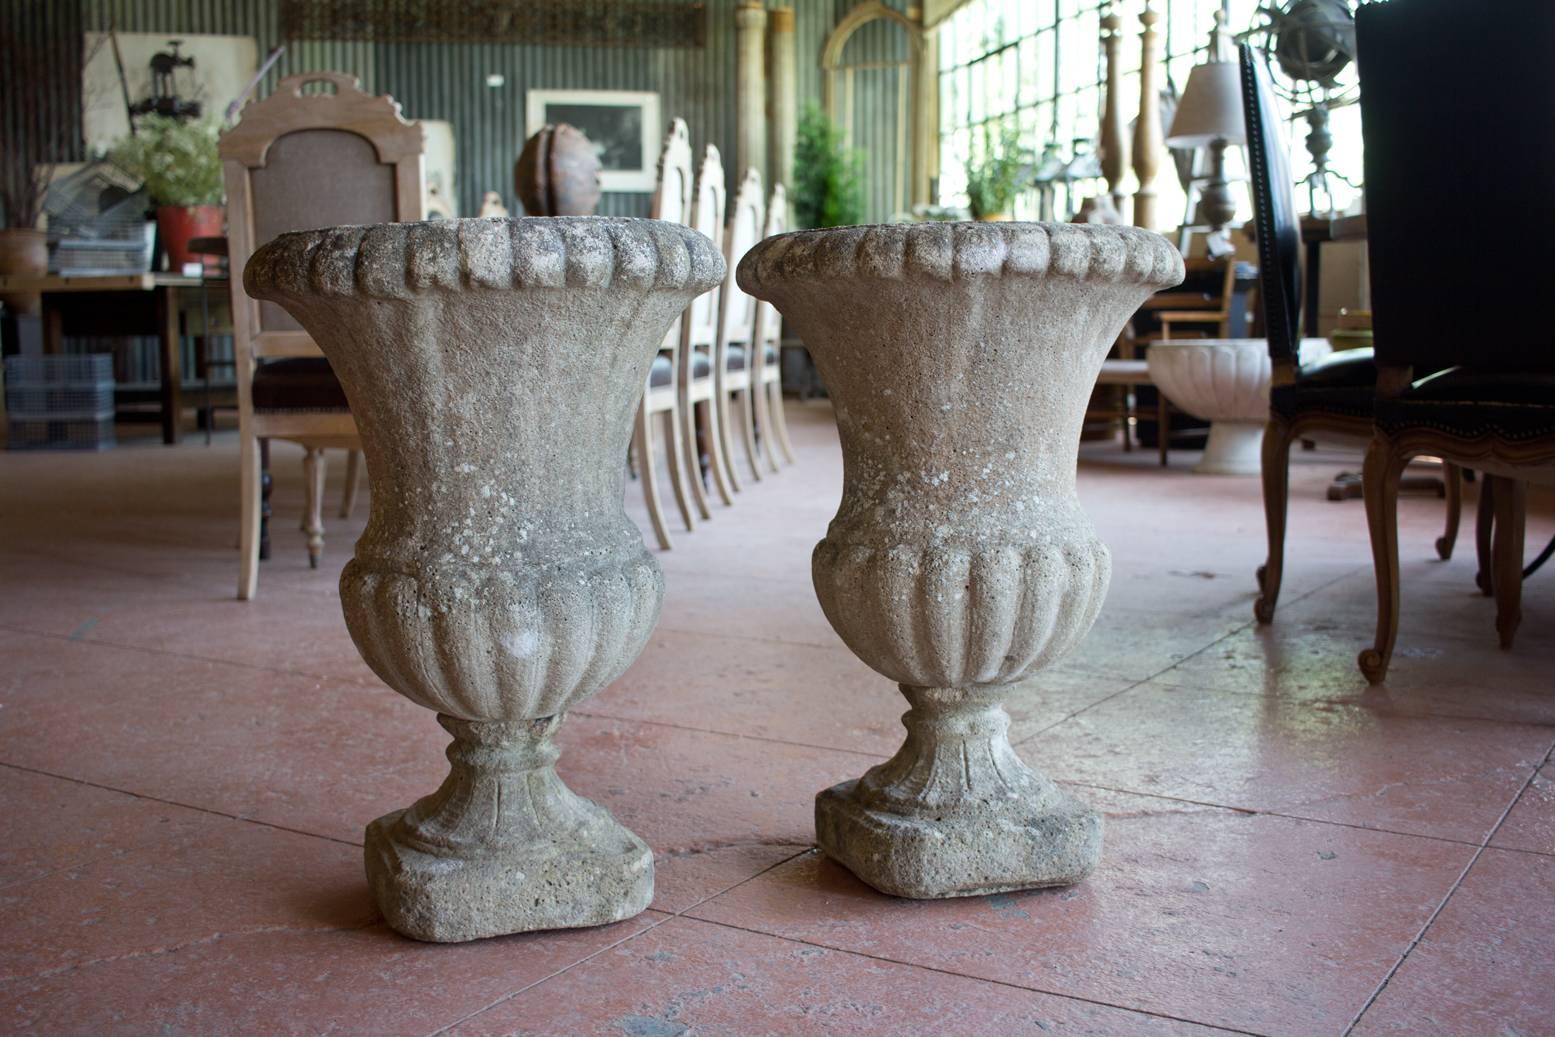 Pair of substantial antique stone urns.